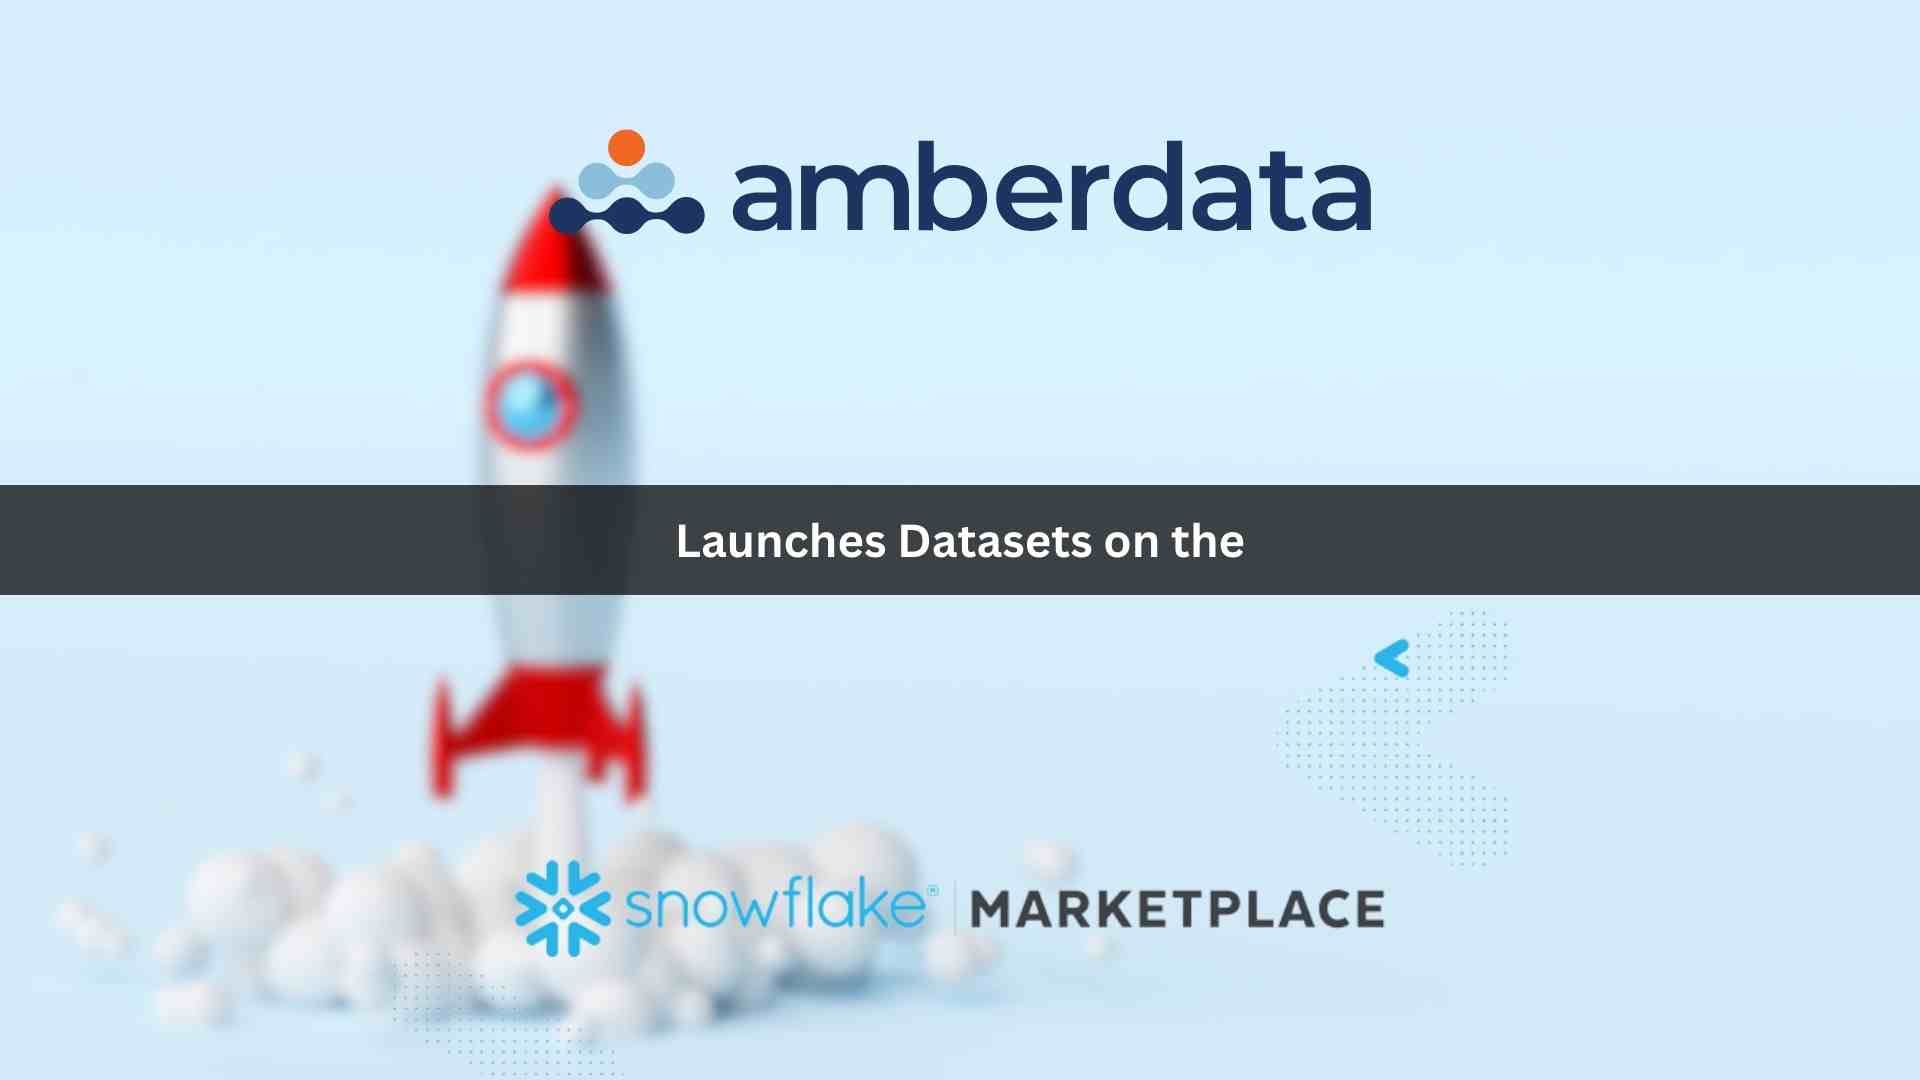 Amberdata Launches Datasets on the Snowflake Marketplace